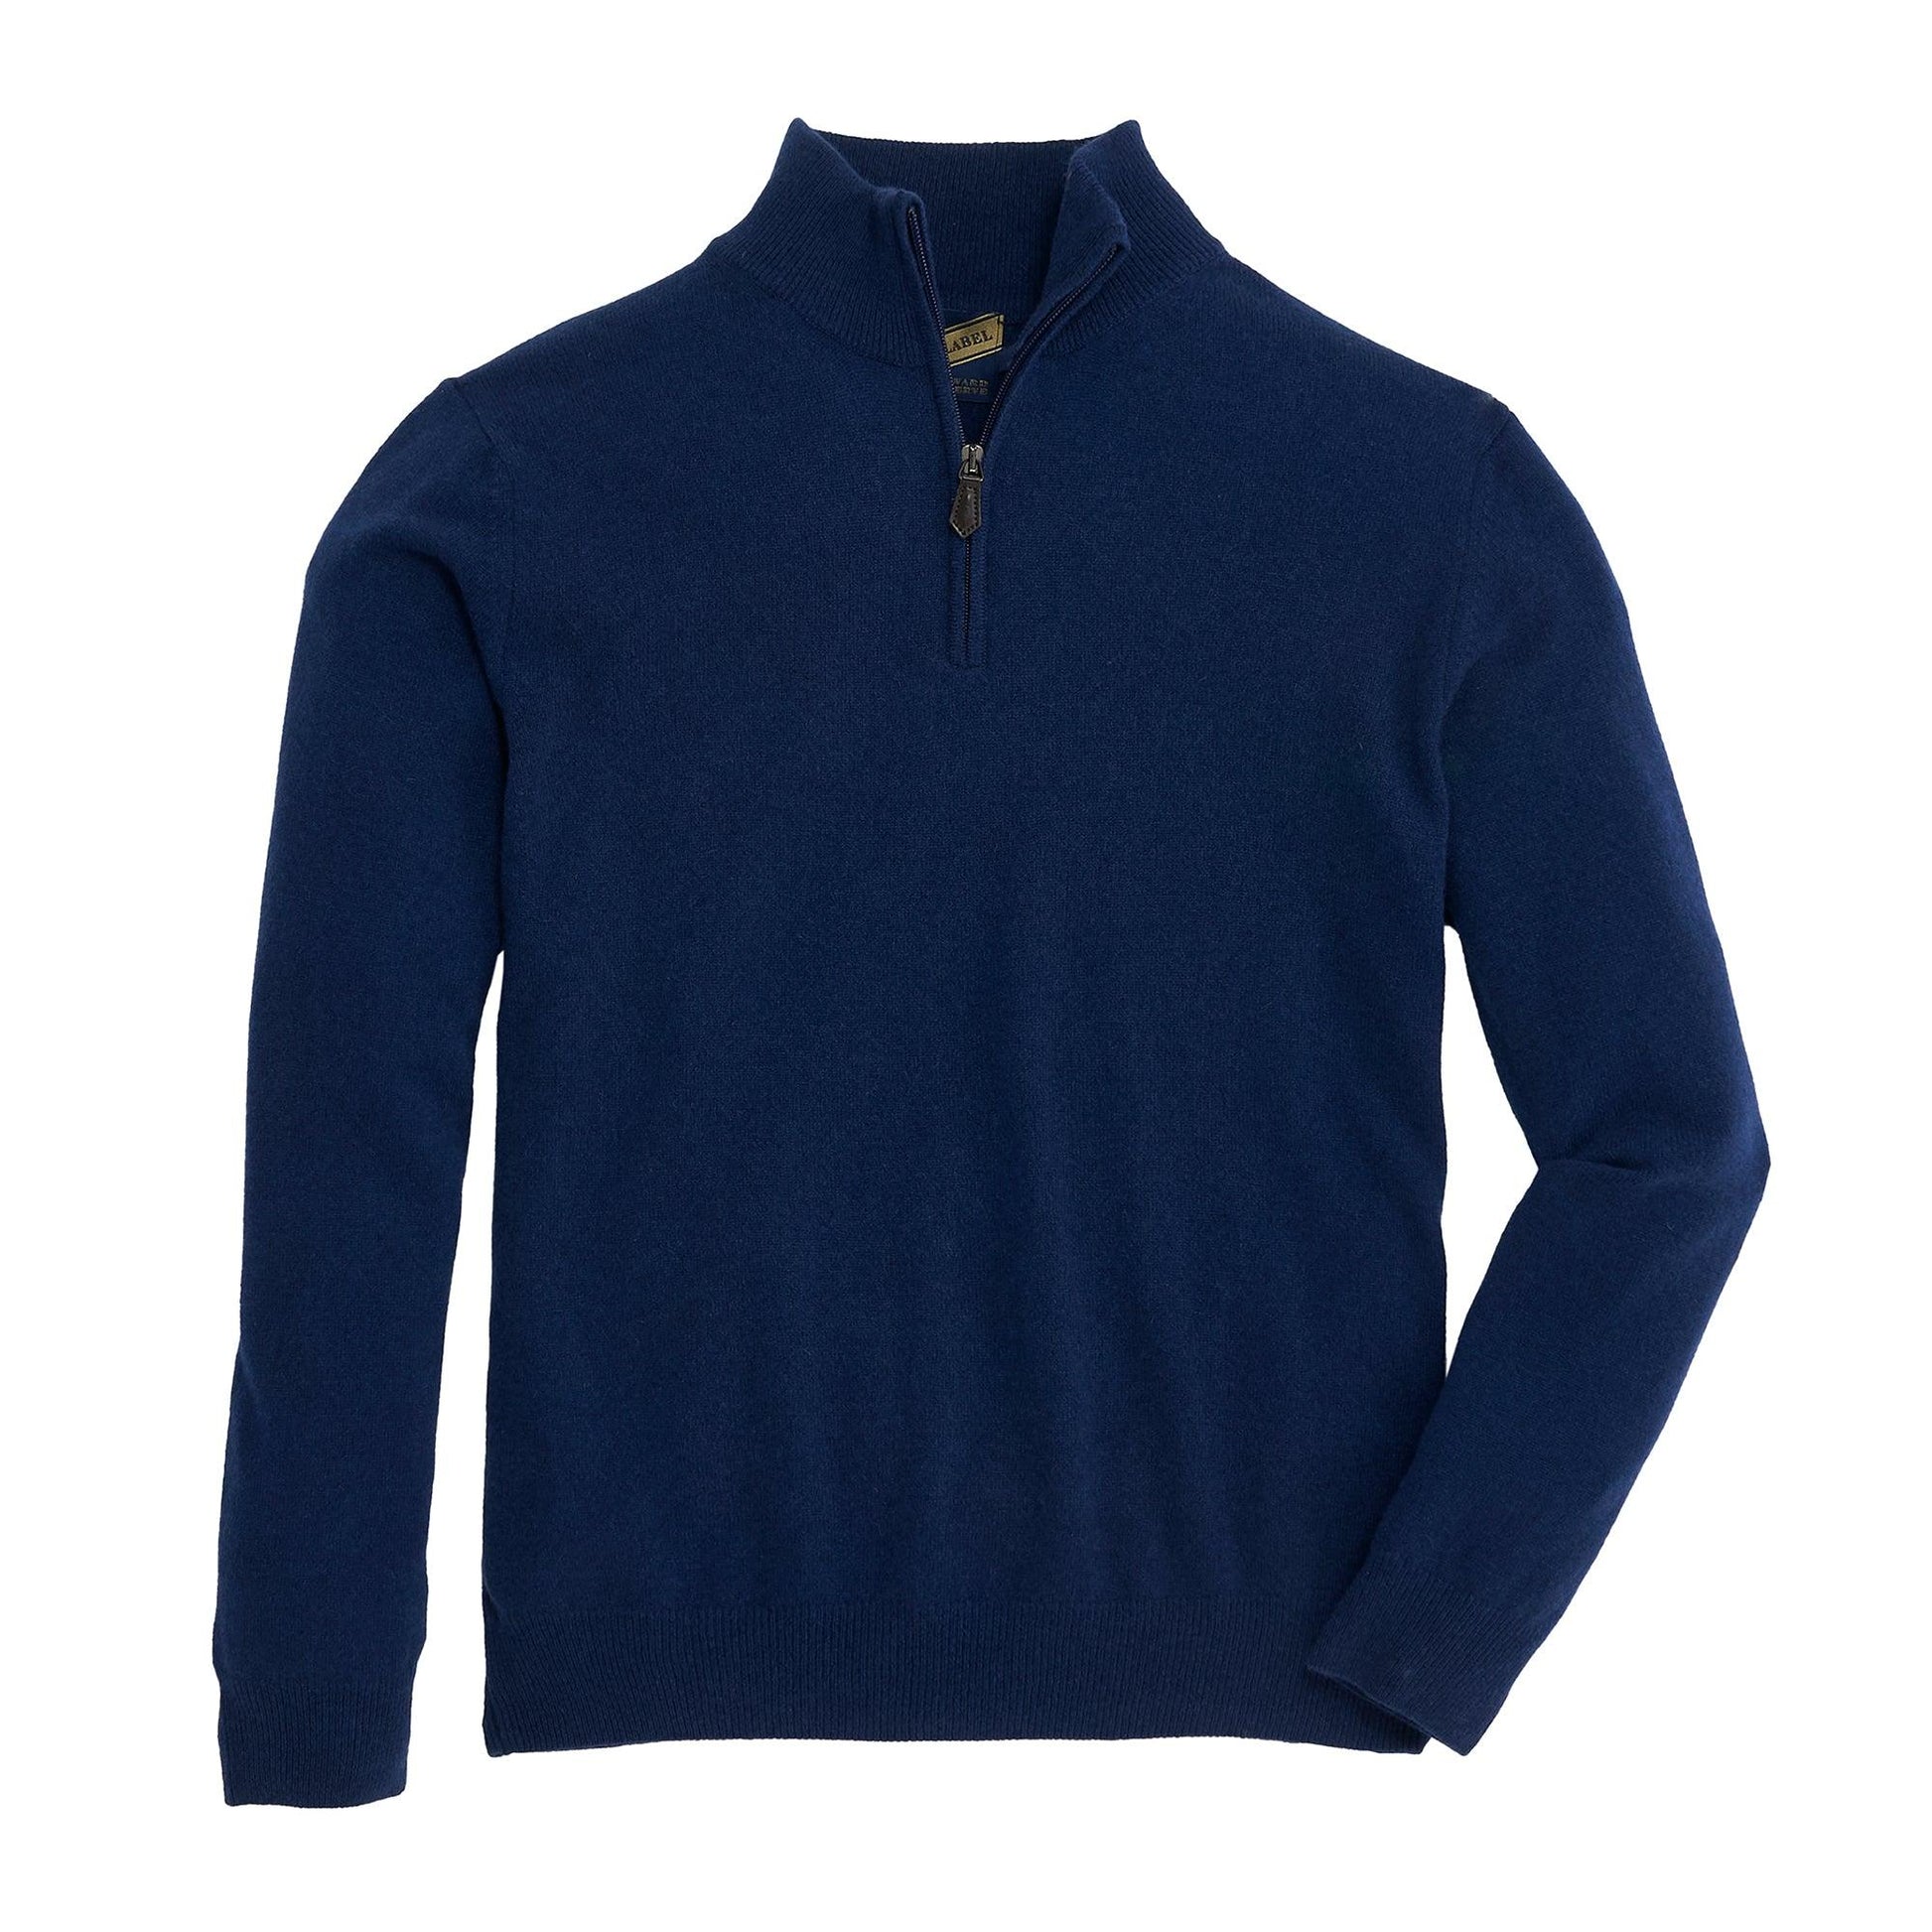 James Cashmere 1/4 Zip Sweater - Onward Reserve